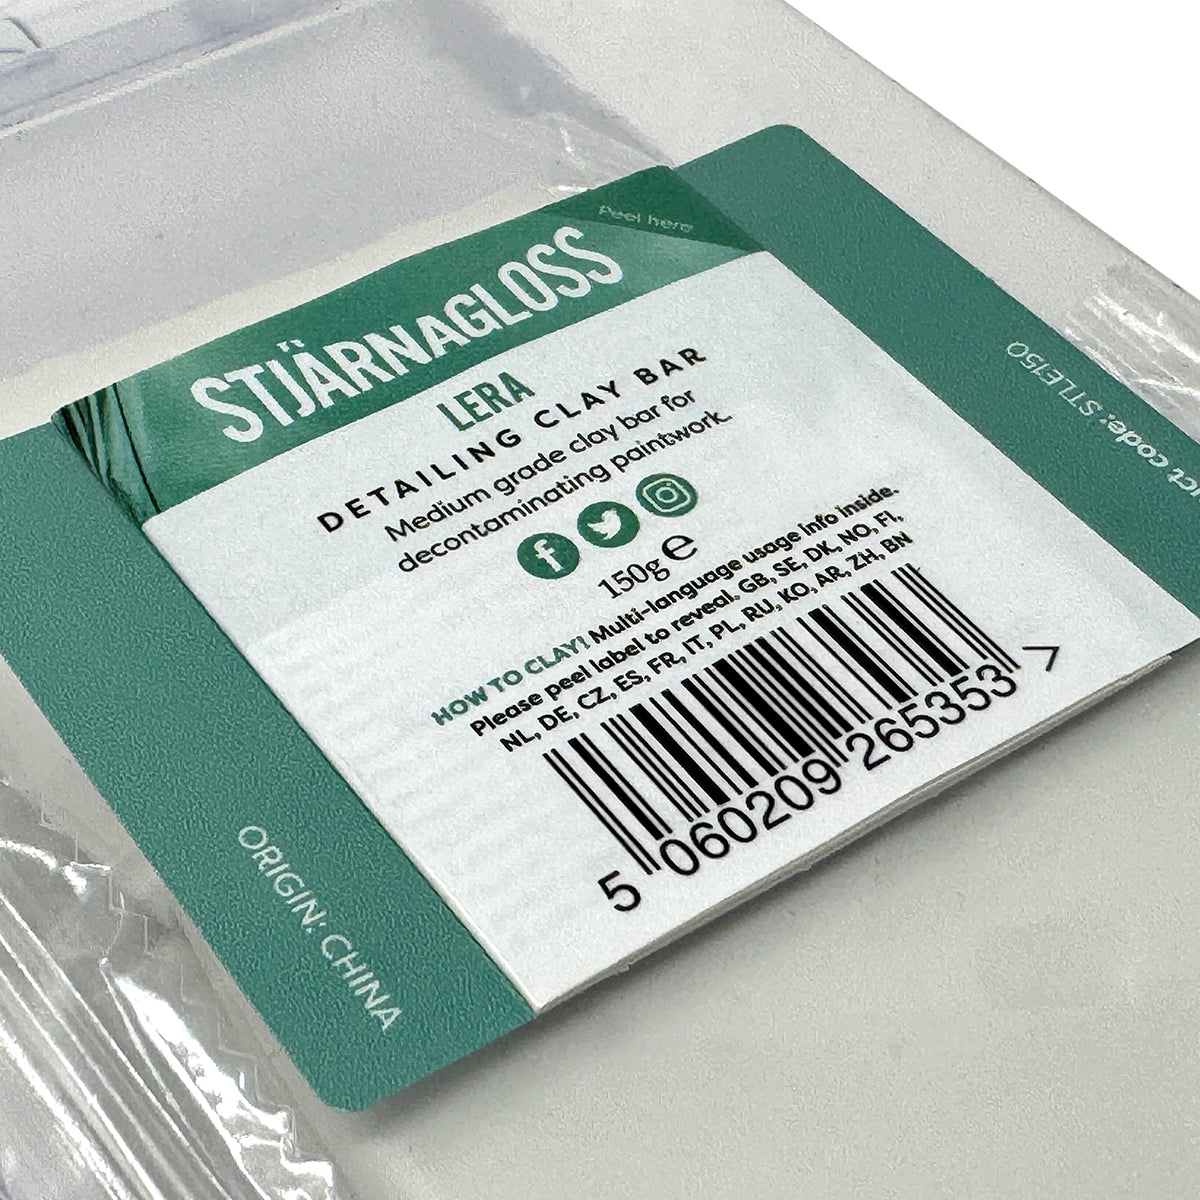 Stjarnagloss Lera - Decontamination Clay Bar 150g (3 pack)